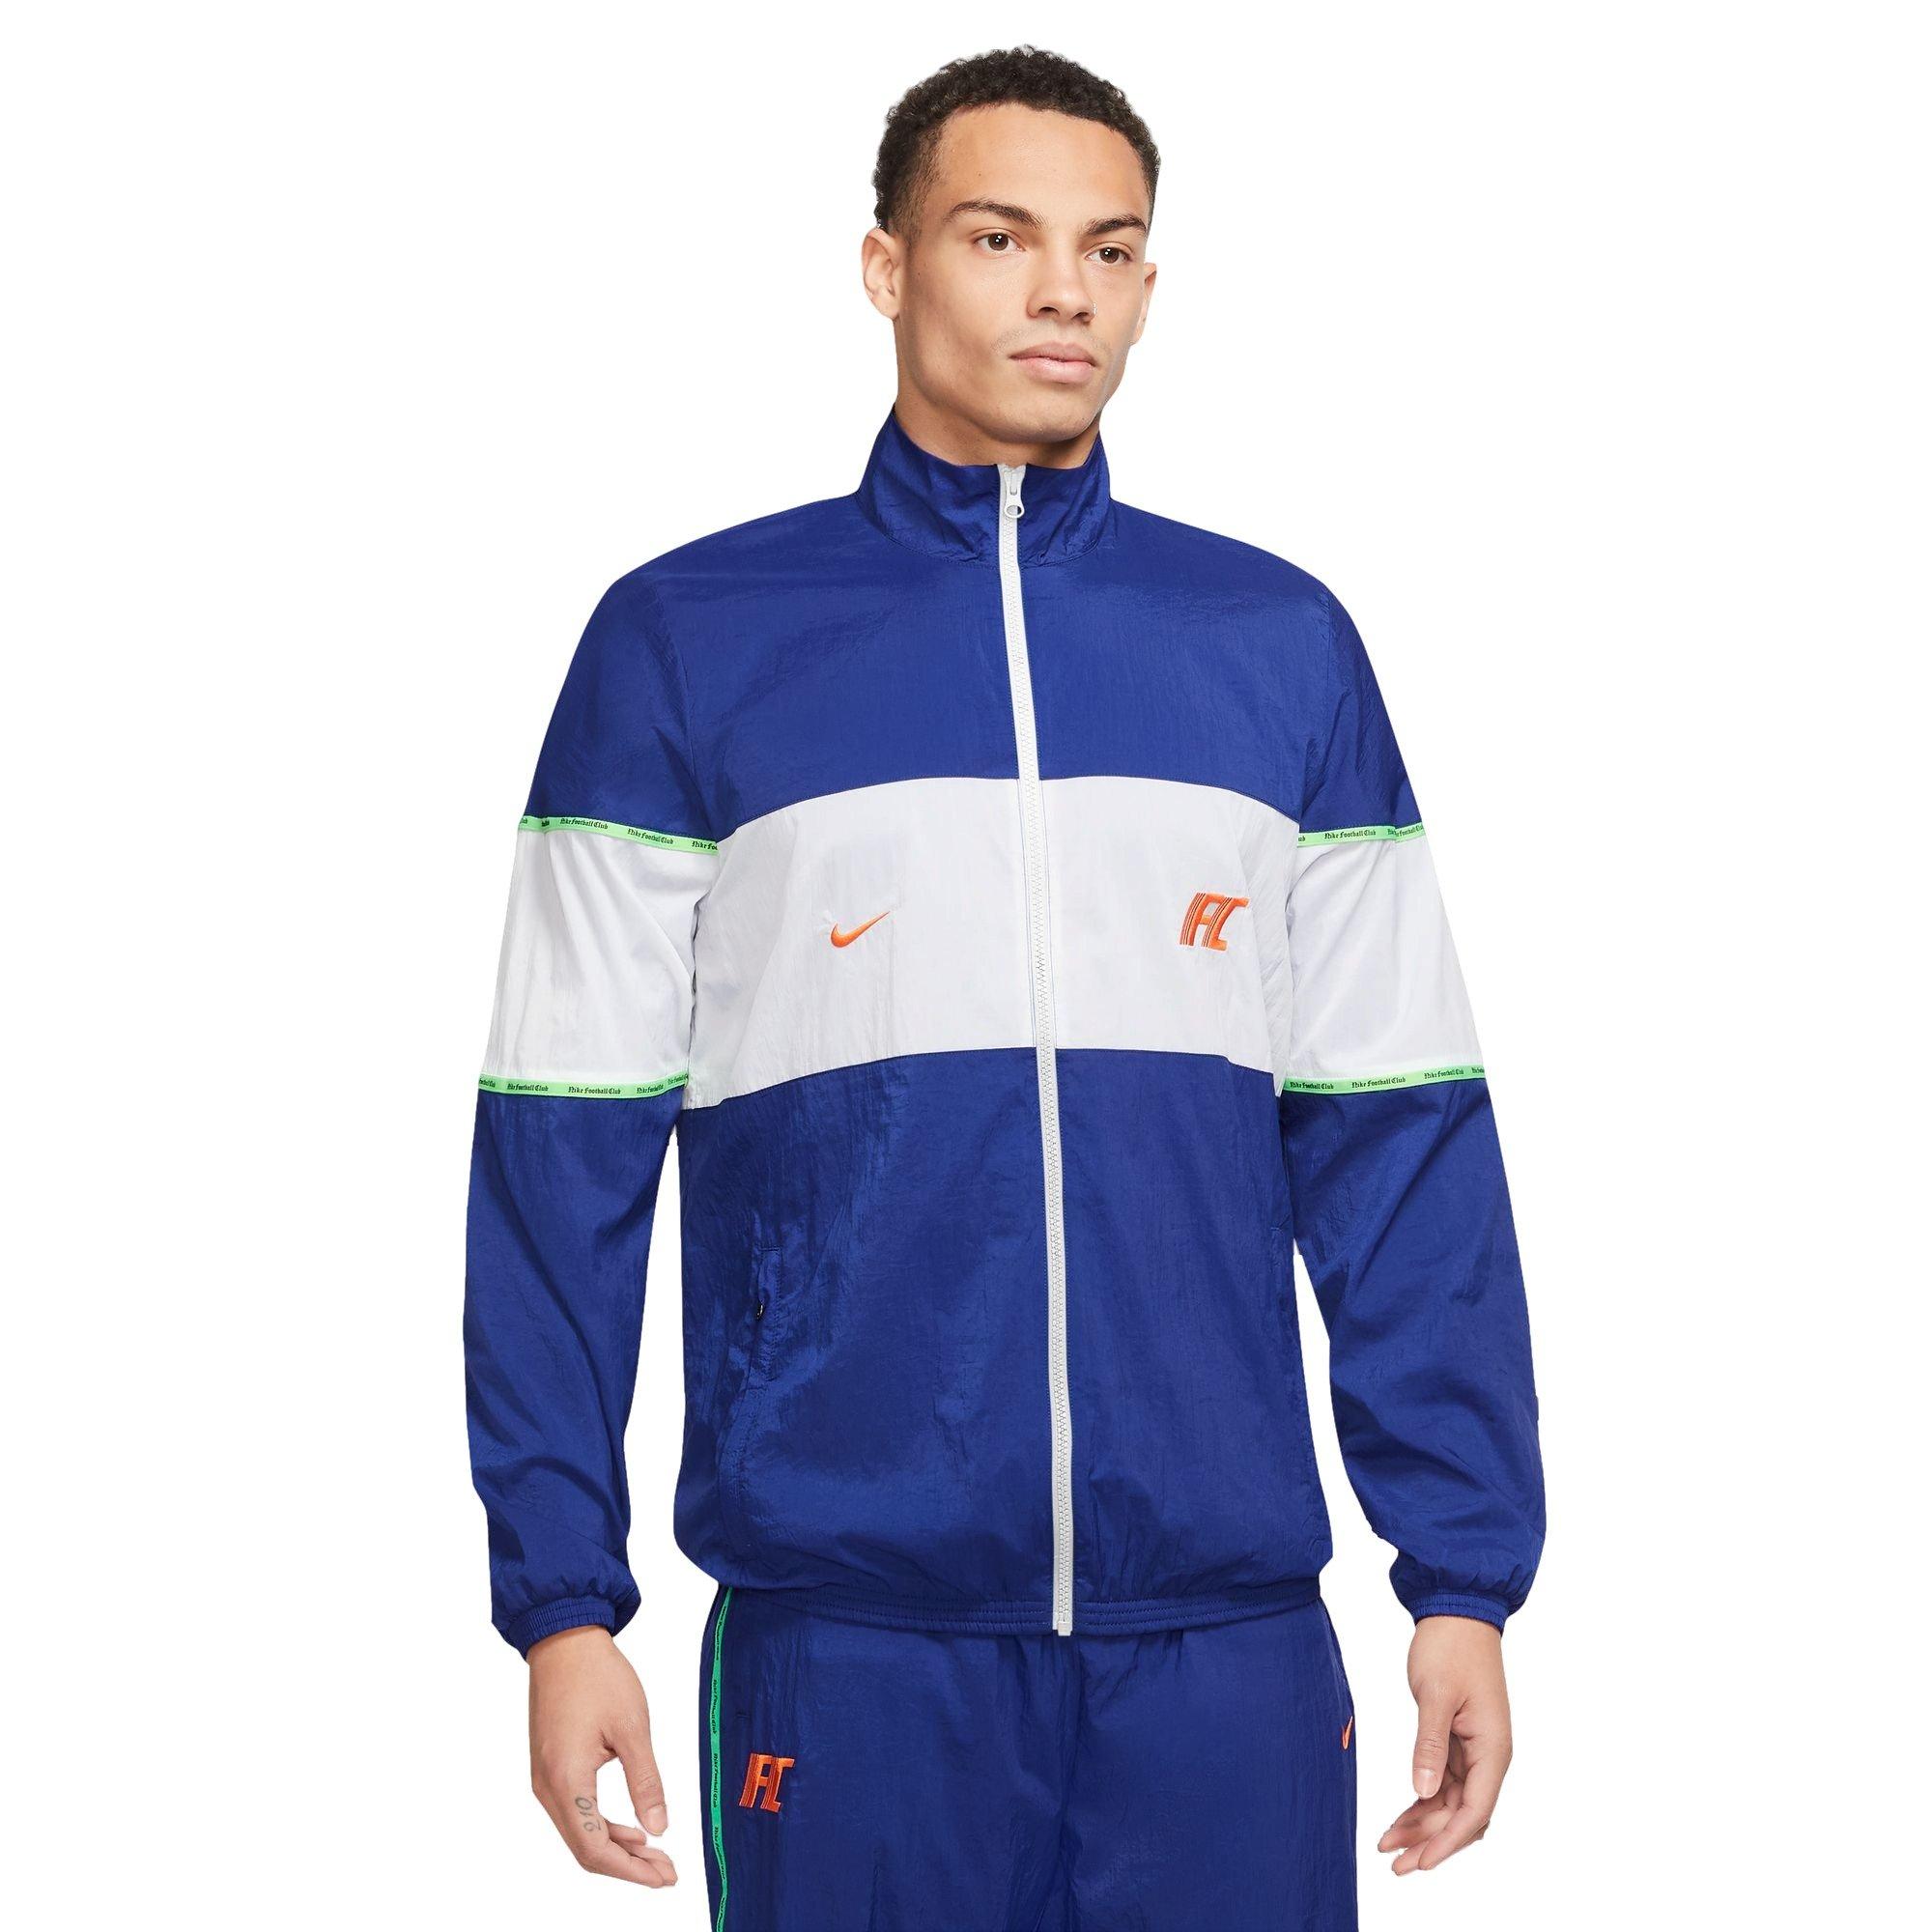 Nike Men's Repel F.C. Woven Track Jacket - Blue